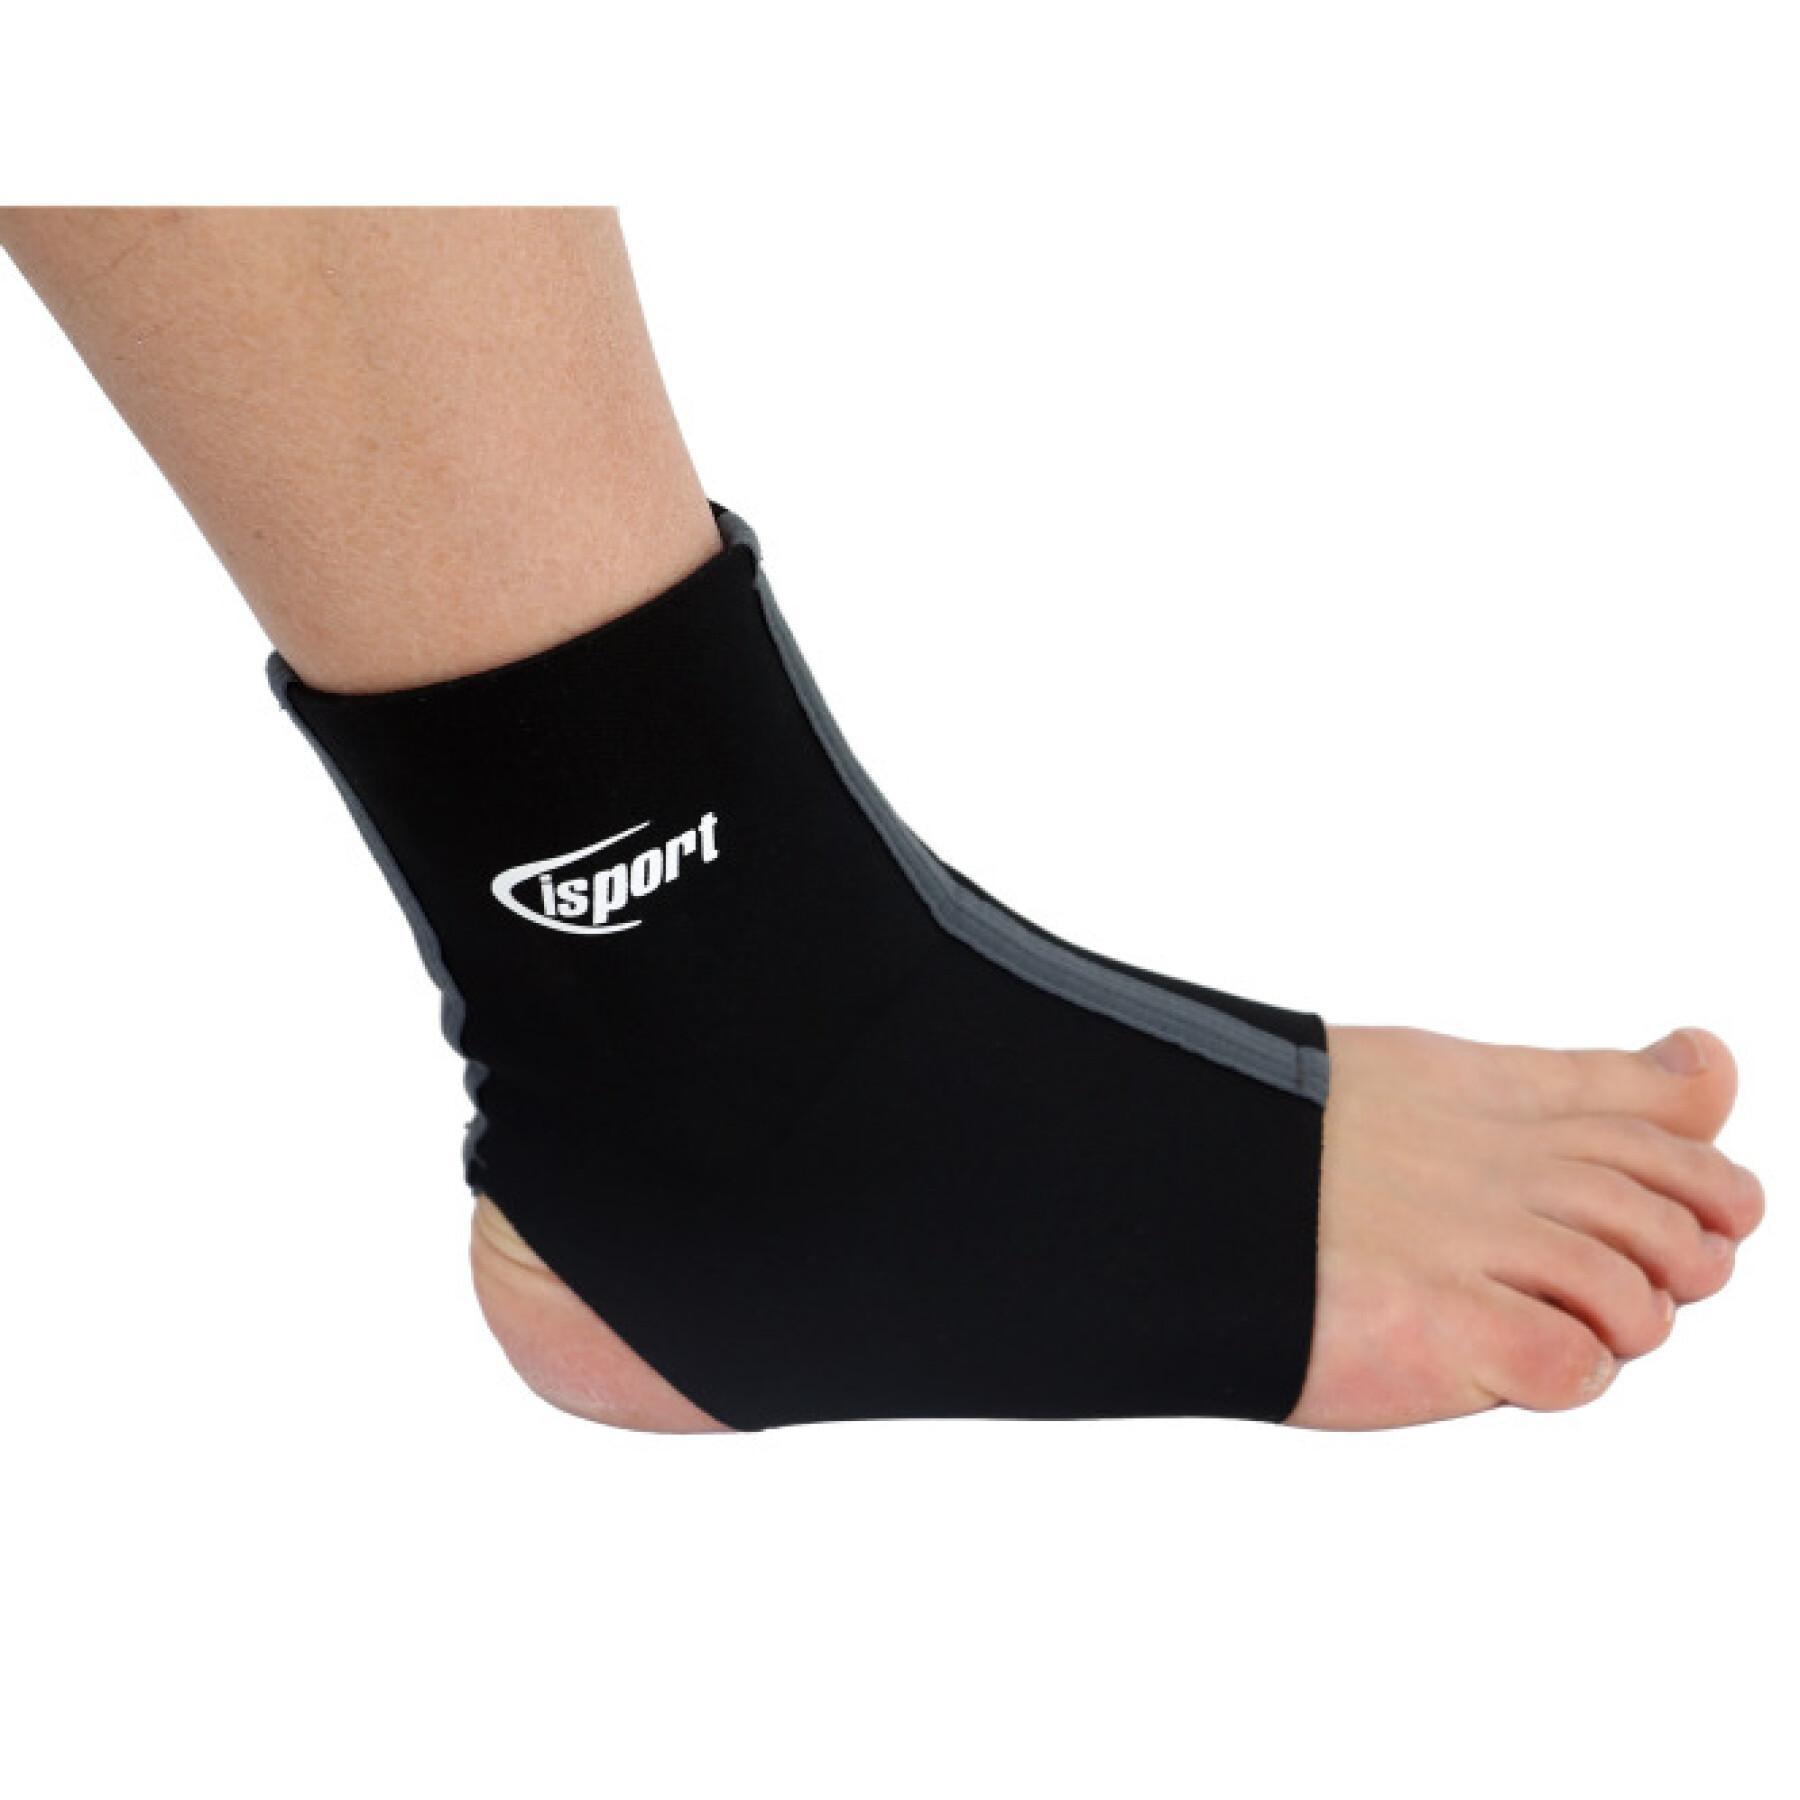 Neoprene ankle support PowerShot